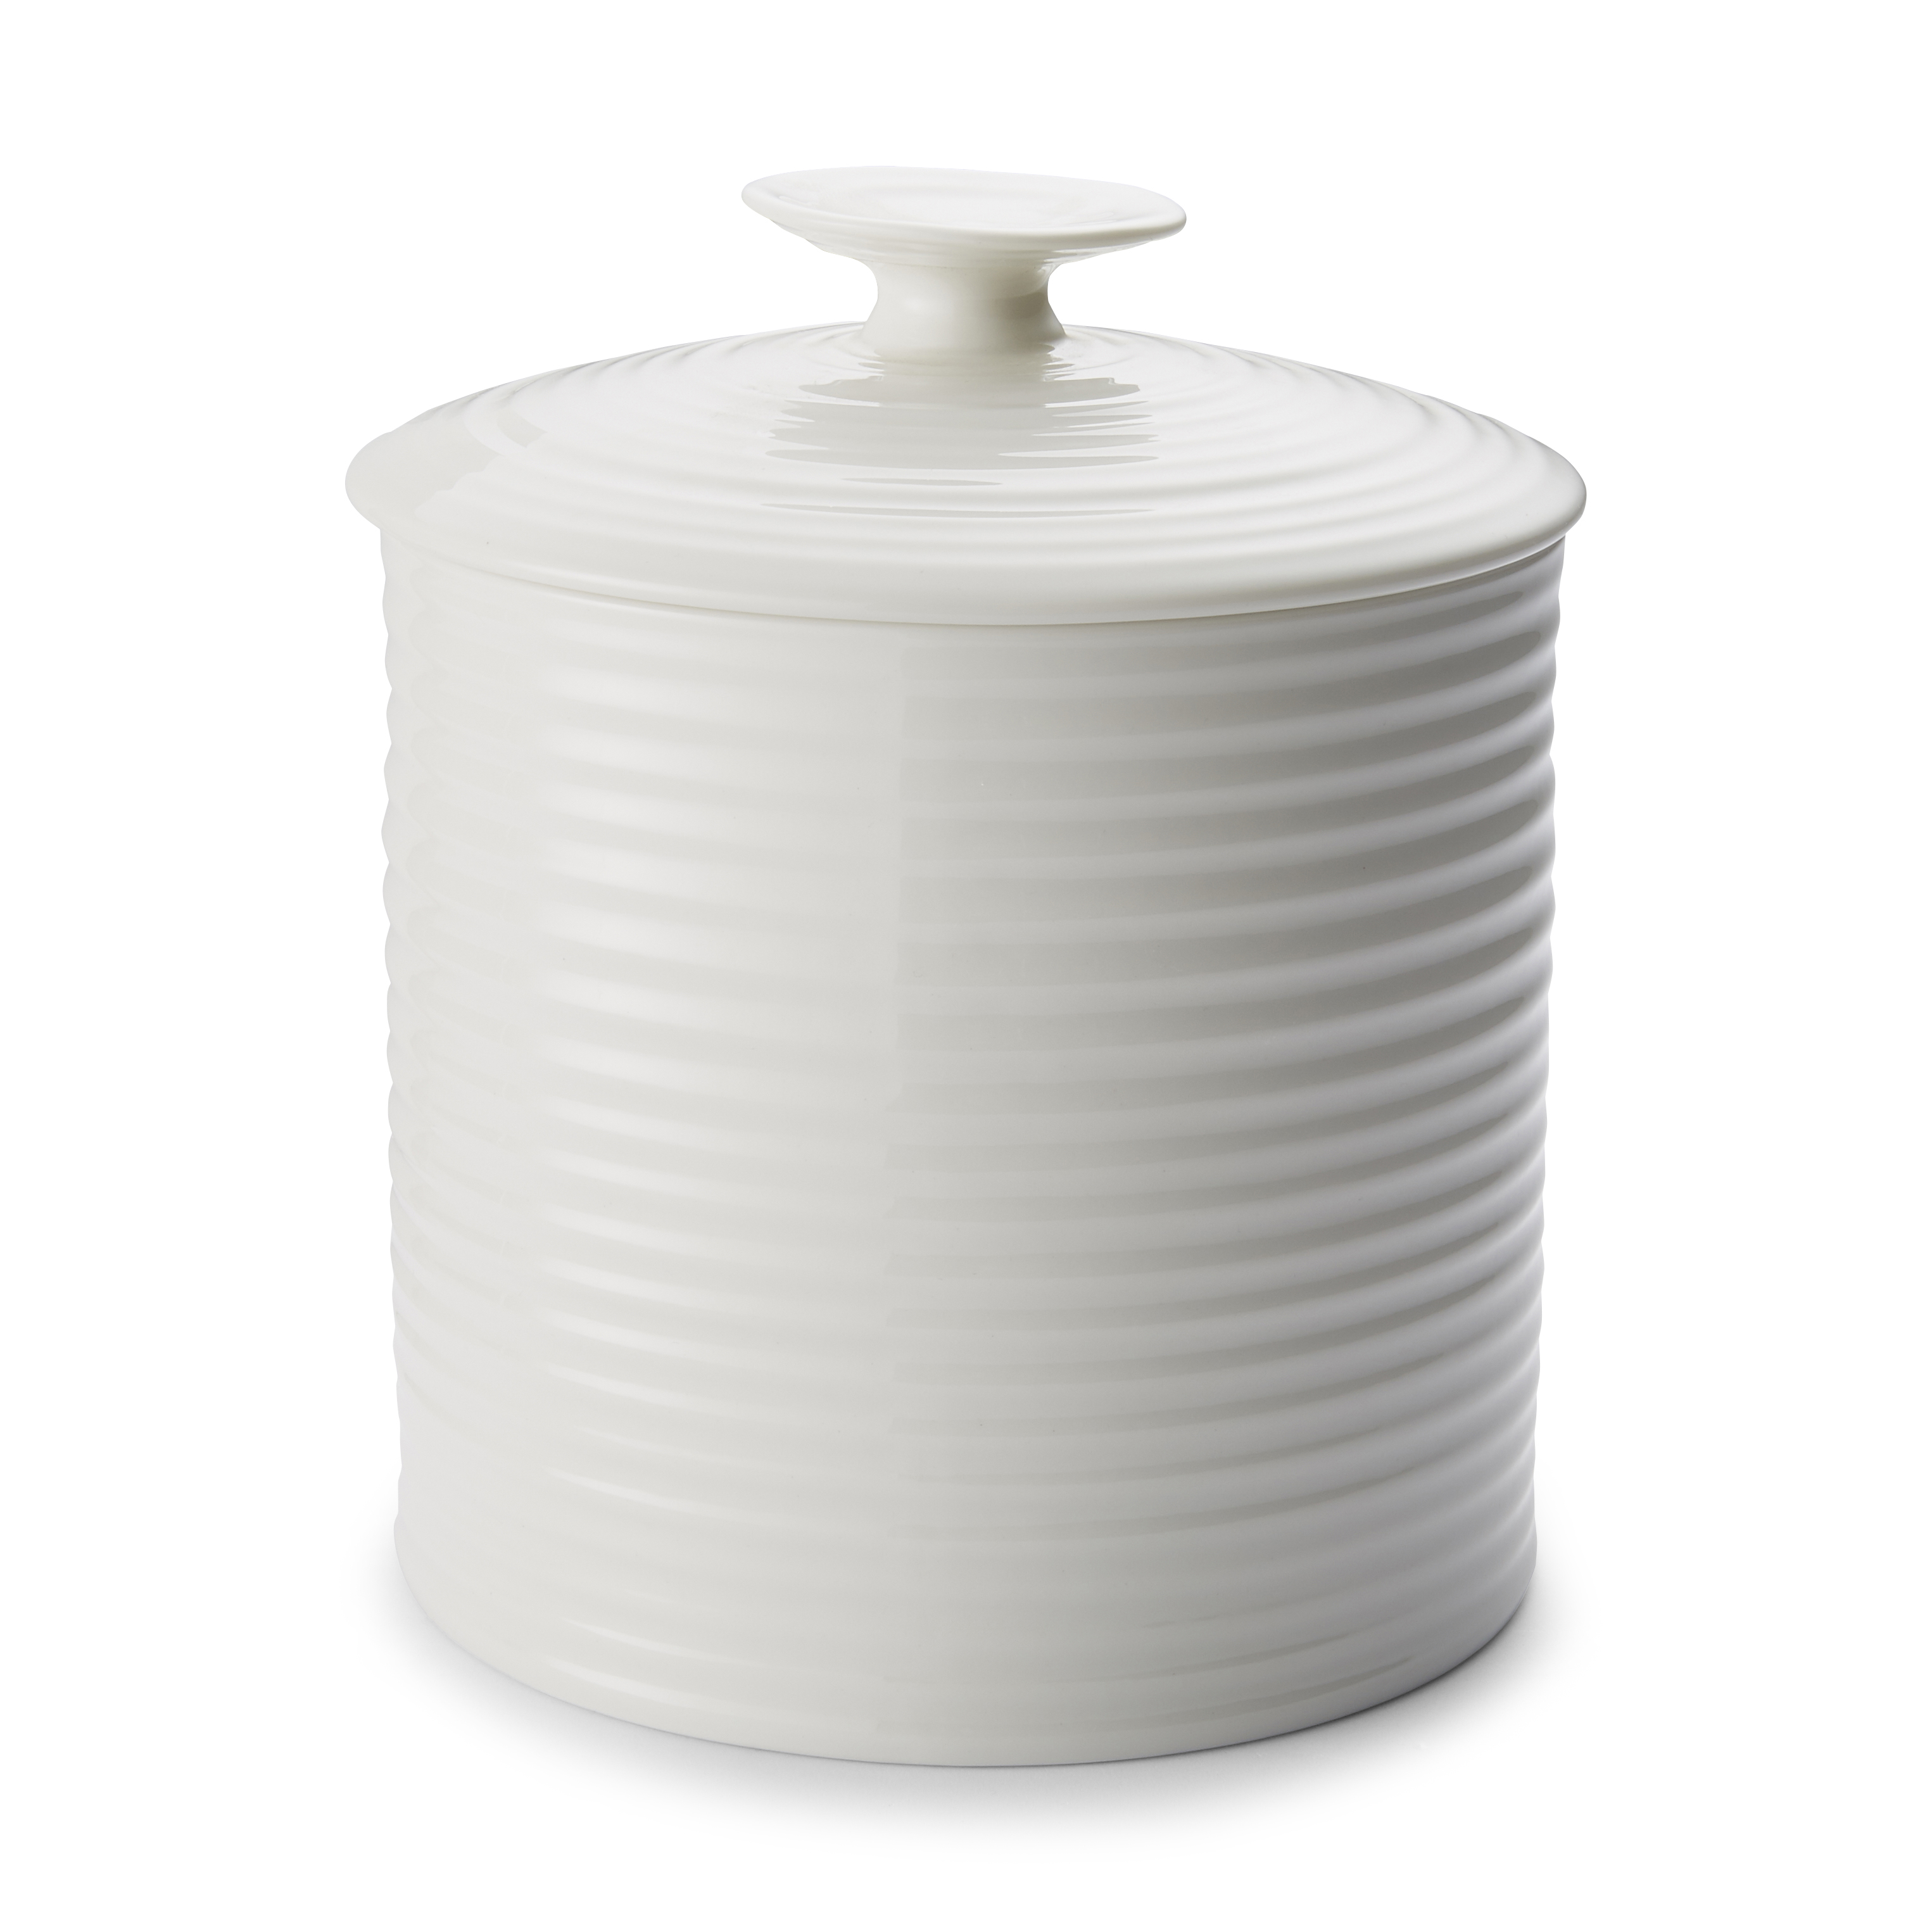 Sophie Conran Large Storage Jar, White image number null